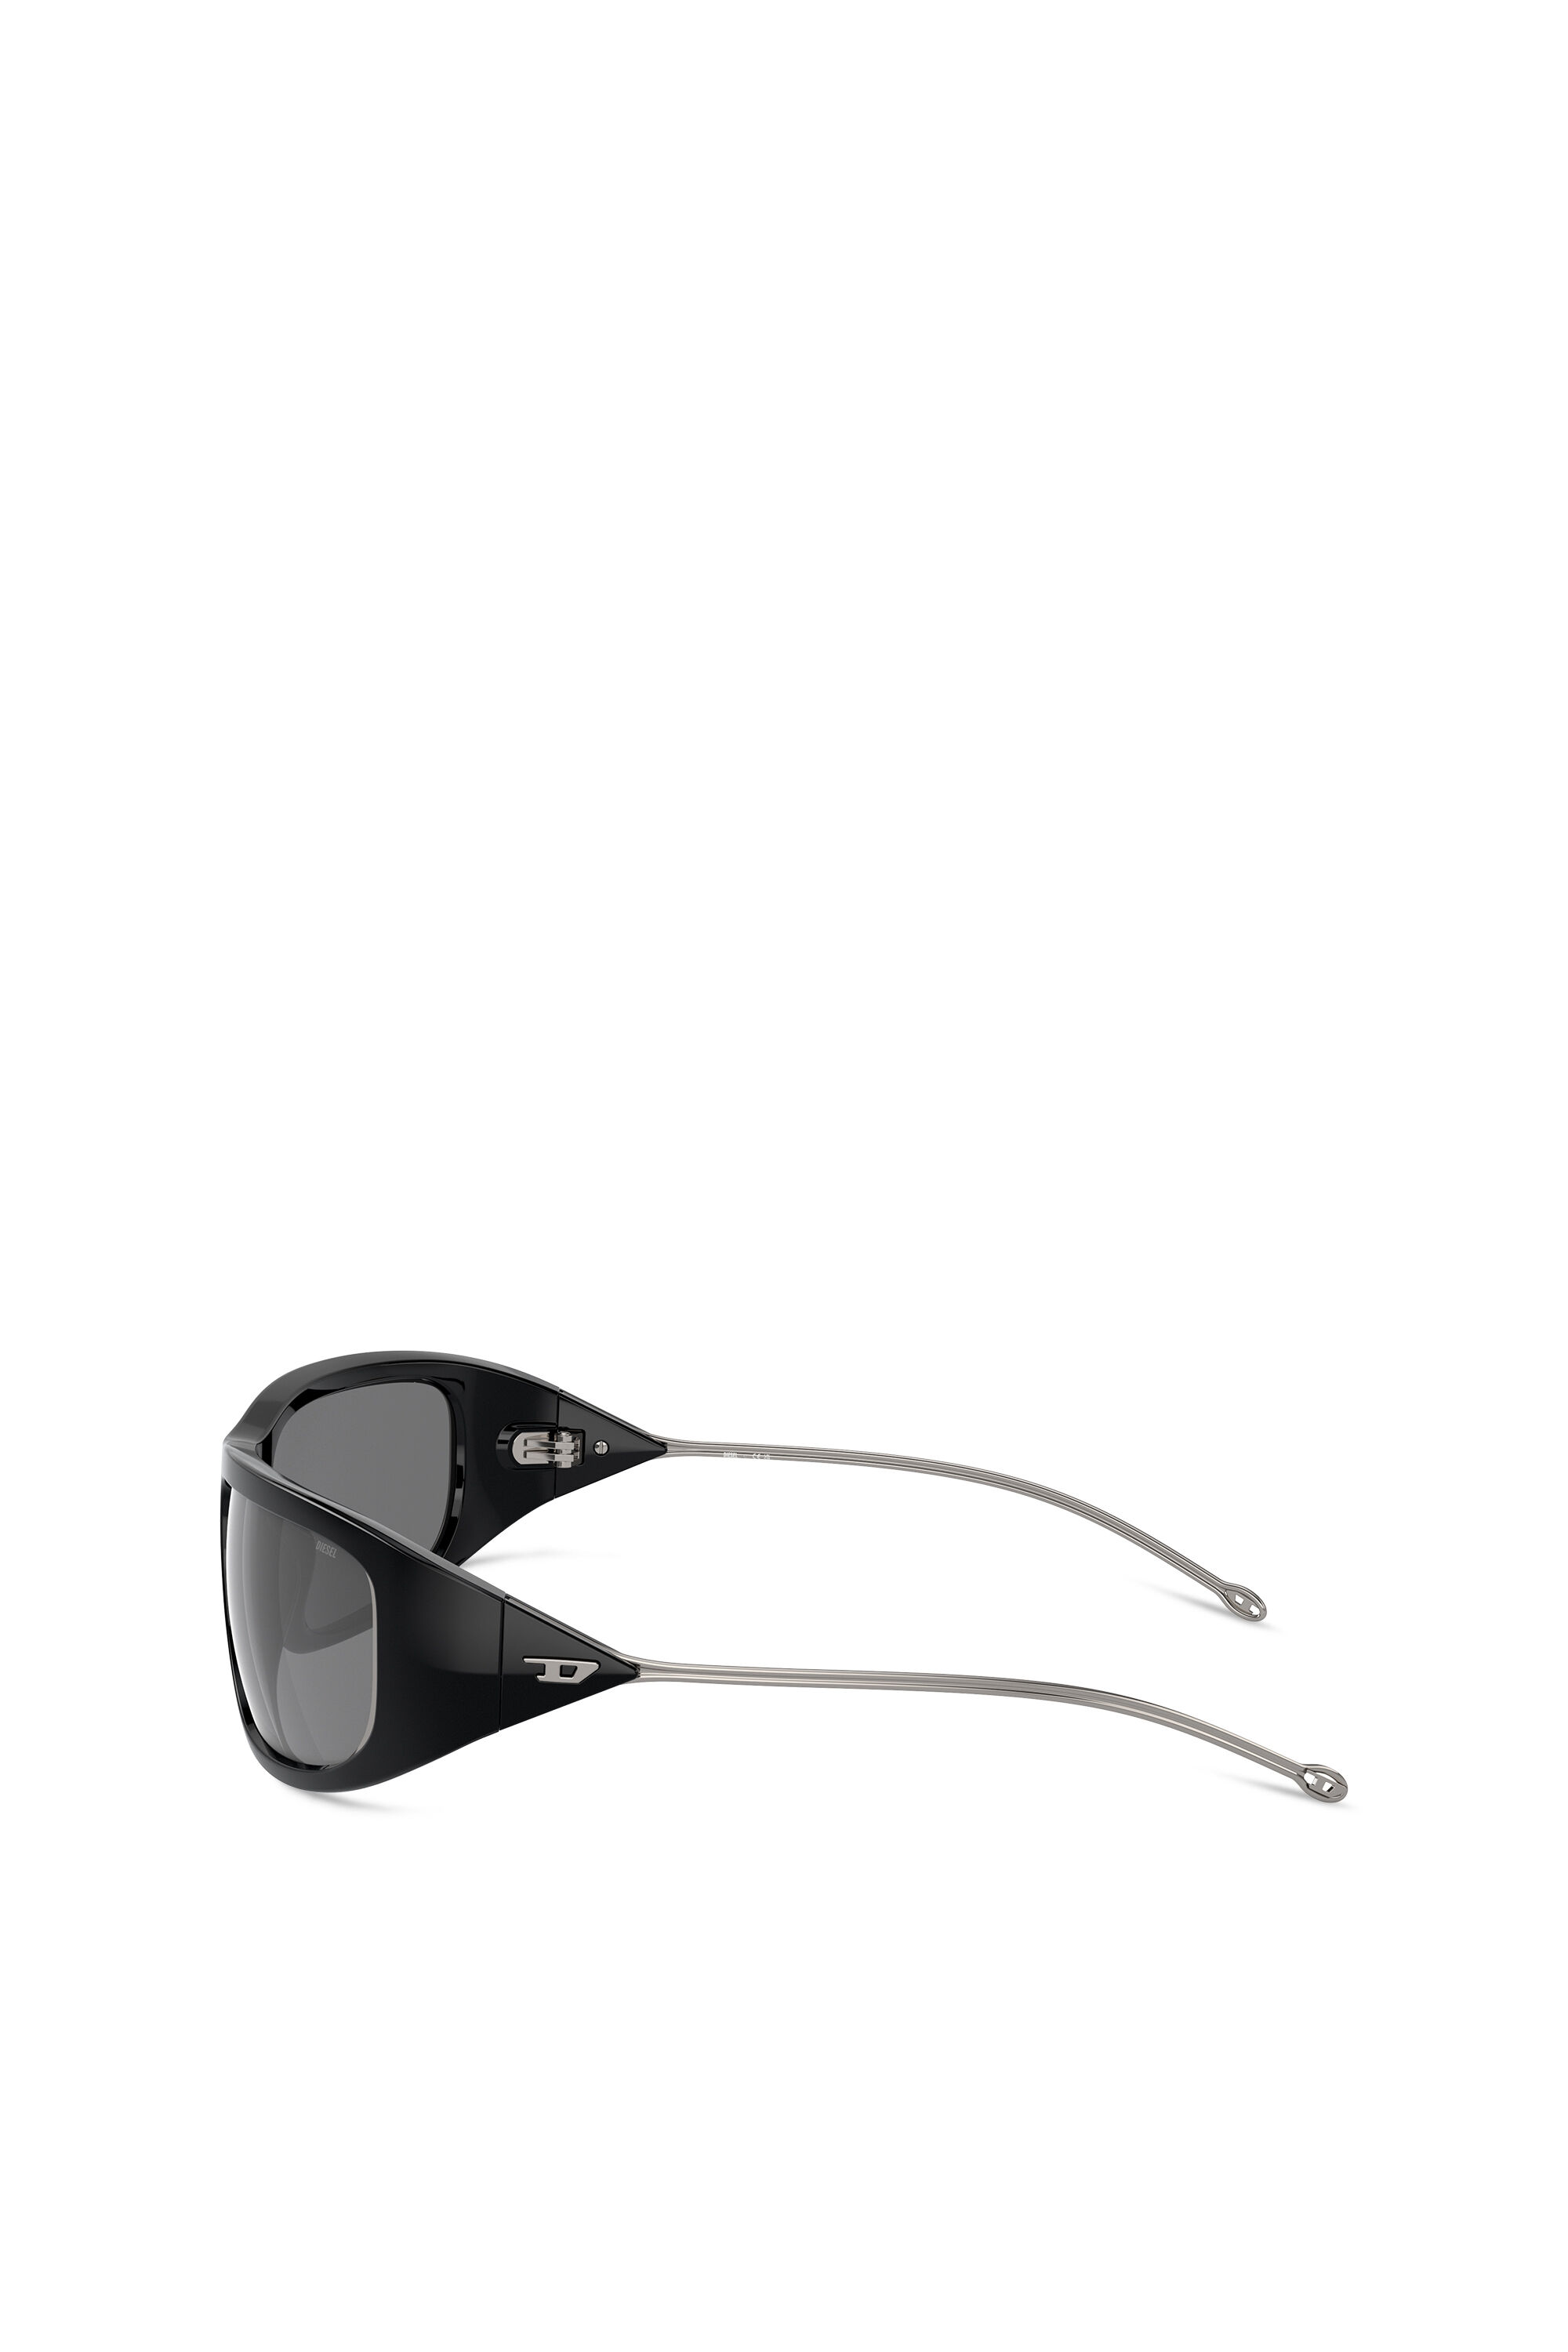 Women's Wraparound style sunglasses | Black | Diesel